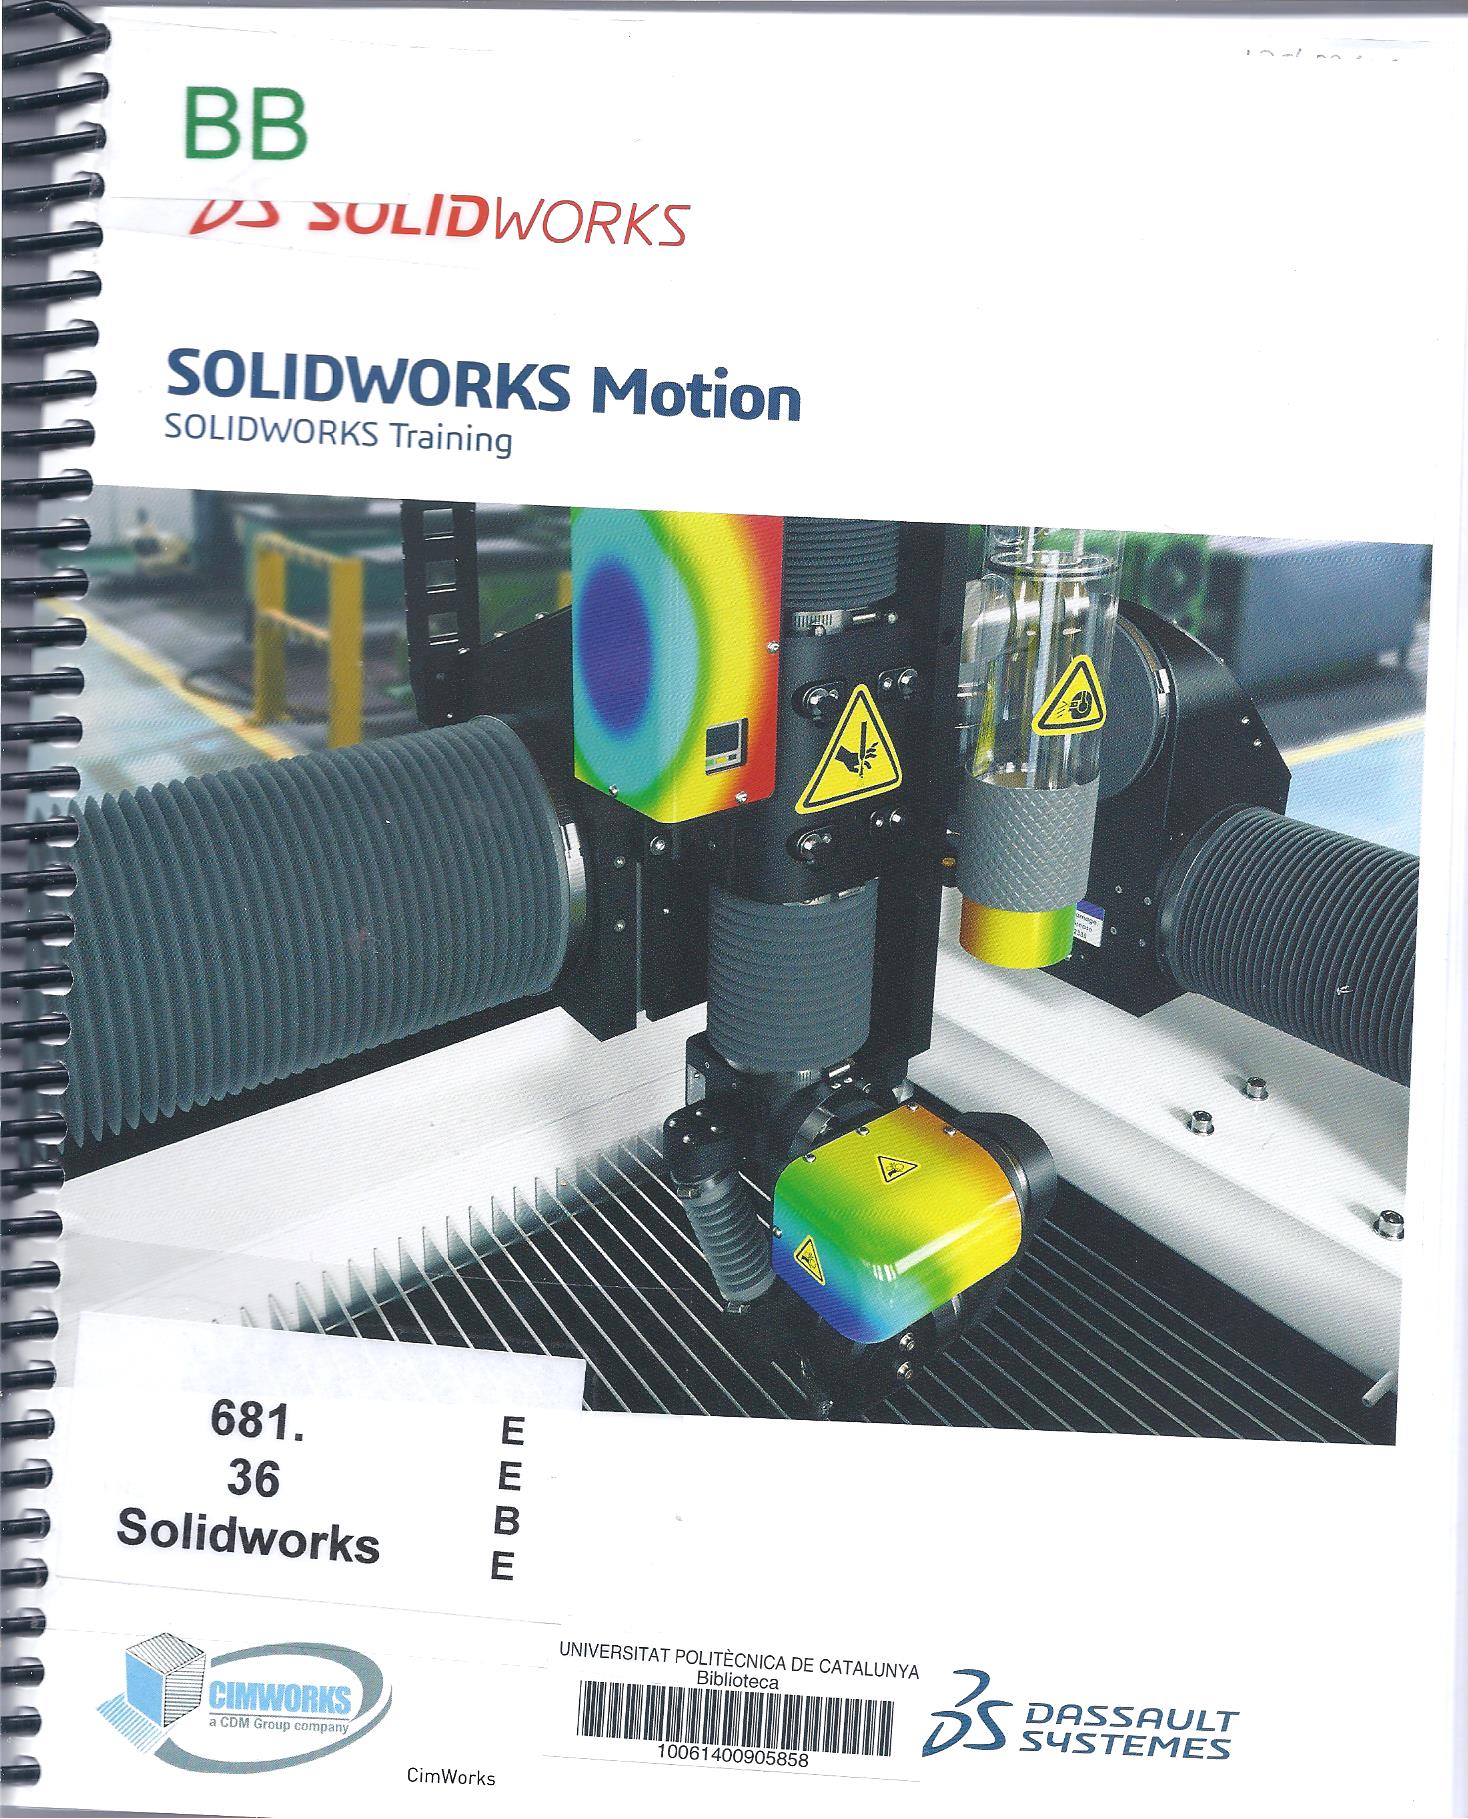 Solidworks motion/ Solidworks